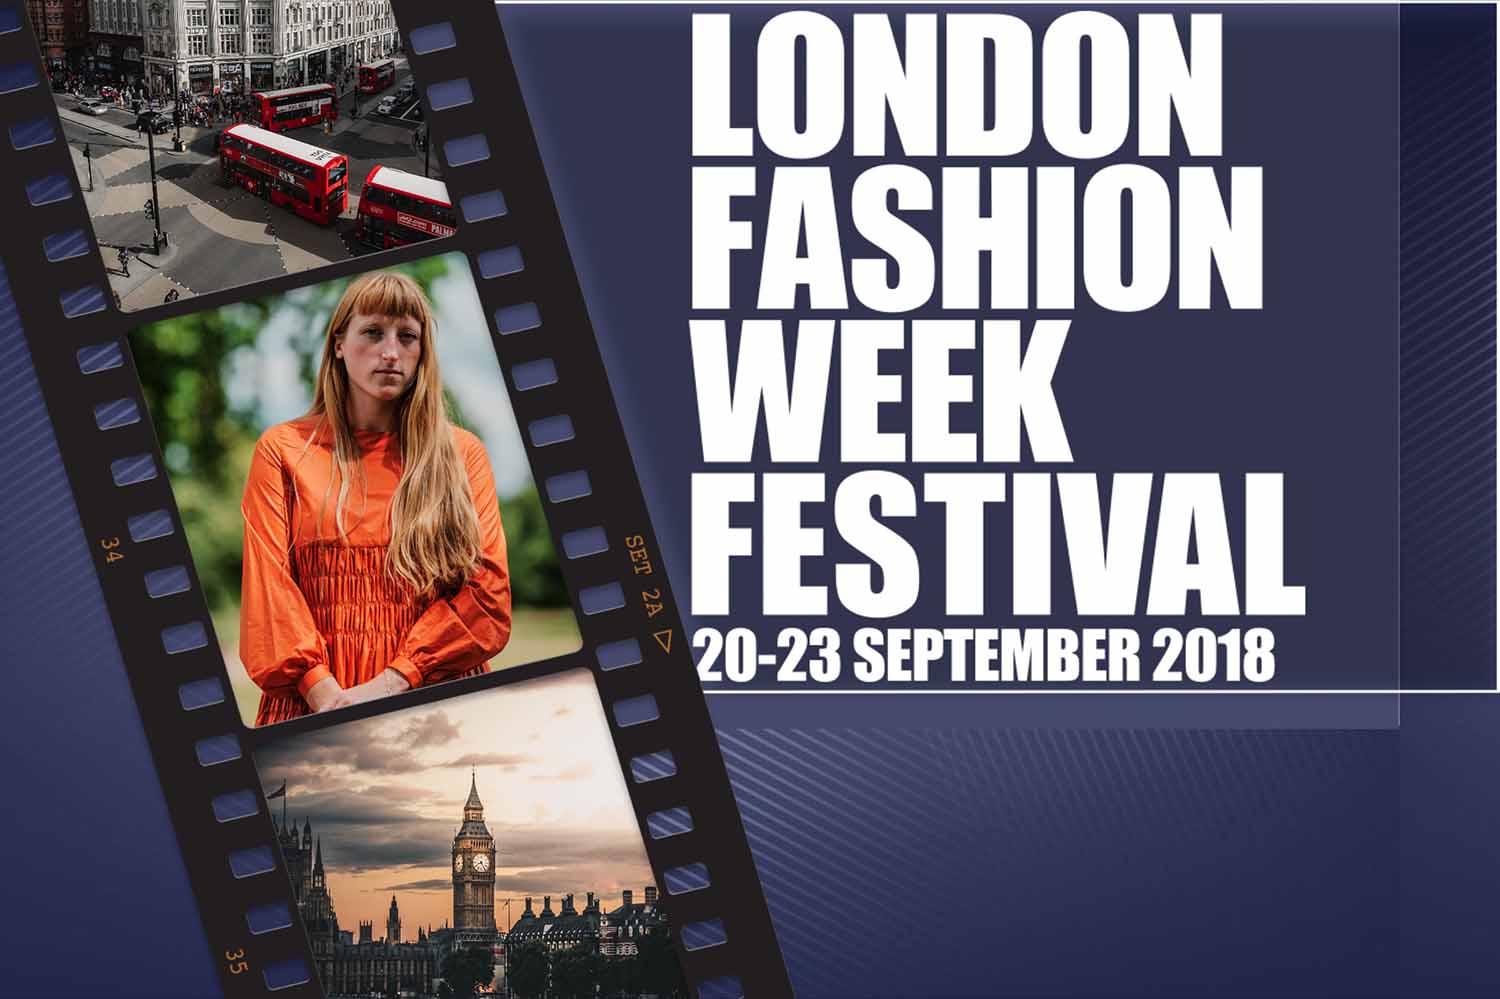 Molly Goddard Designs the London Fashion Week Festival Limited Edition Tote Bag